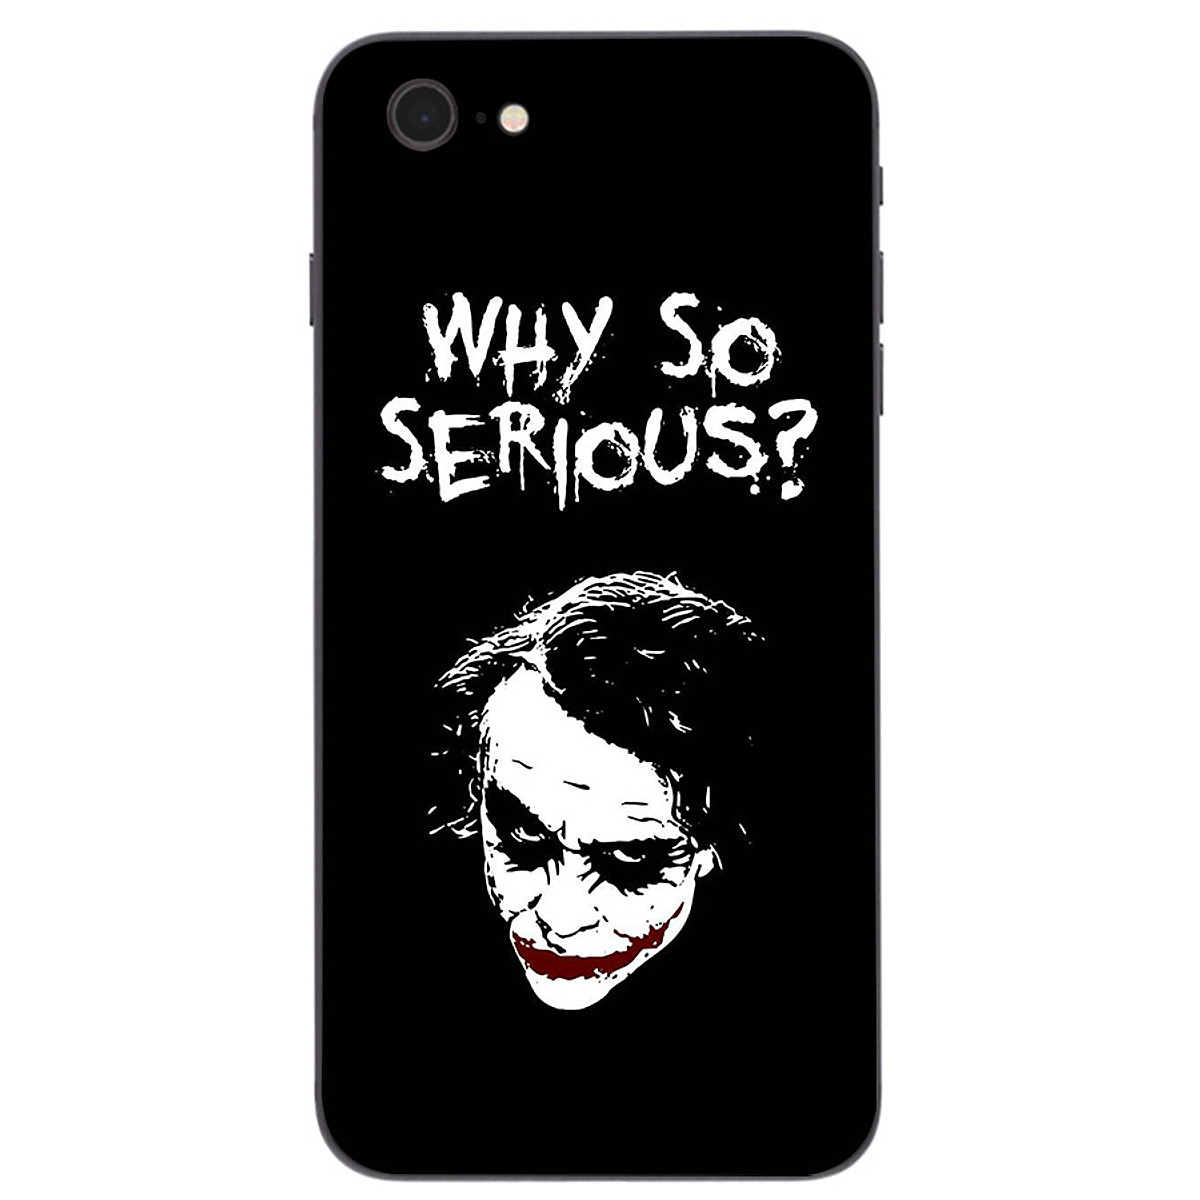 Ốp điện thoại dành cho máy iPhone 7 / 8 - Why so serious  MS ACZTU005